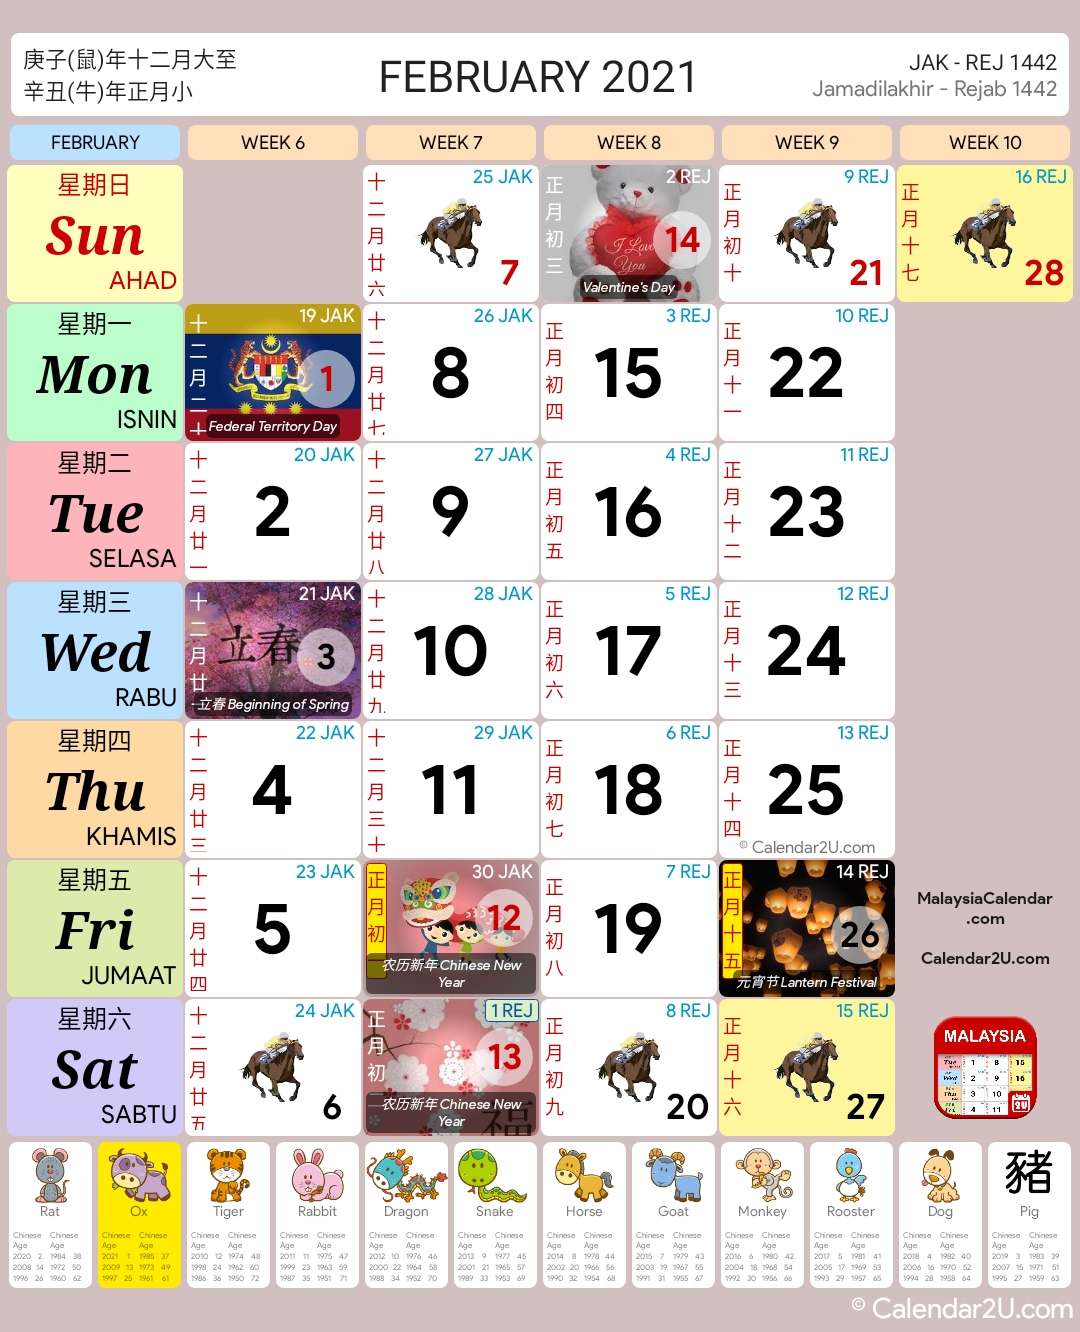 Malaysia Calendar Year 2021 - Malaysia Calendar December 2021 Lunar Calendar